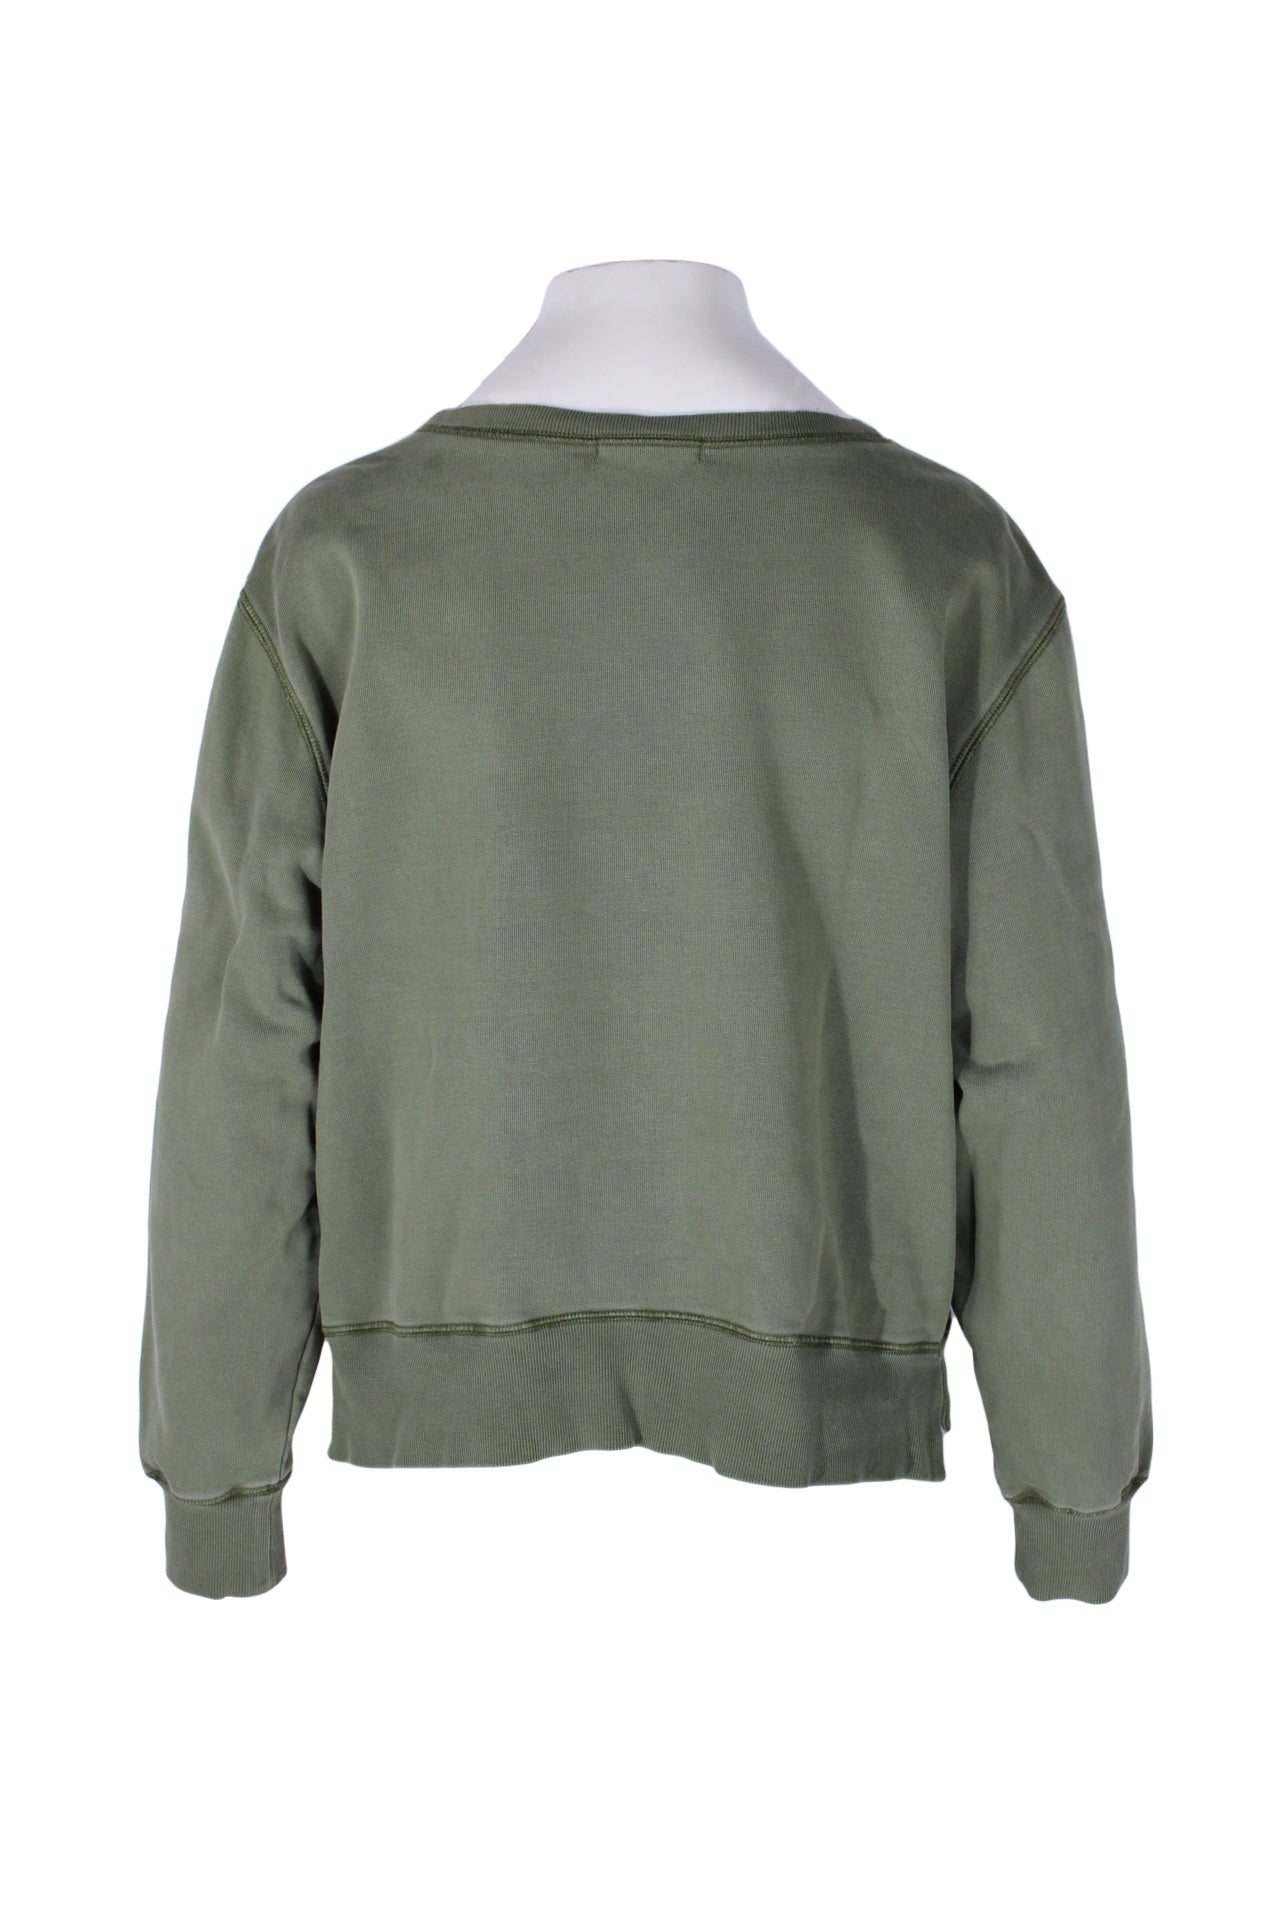 back angle alex mill sage green sweatshirt on feminine mannequin torso.